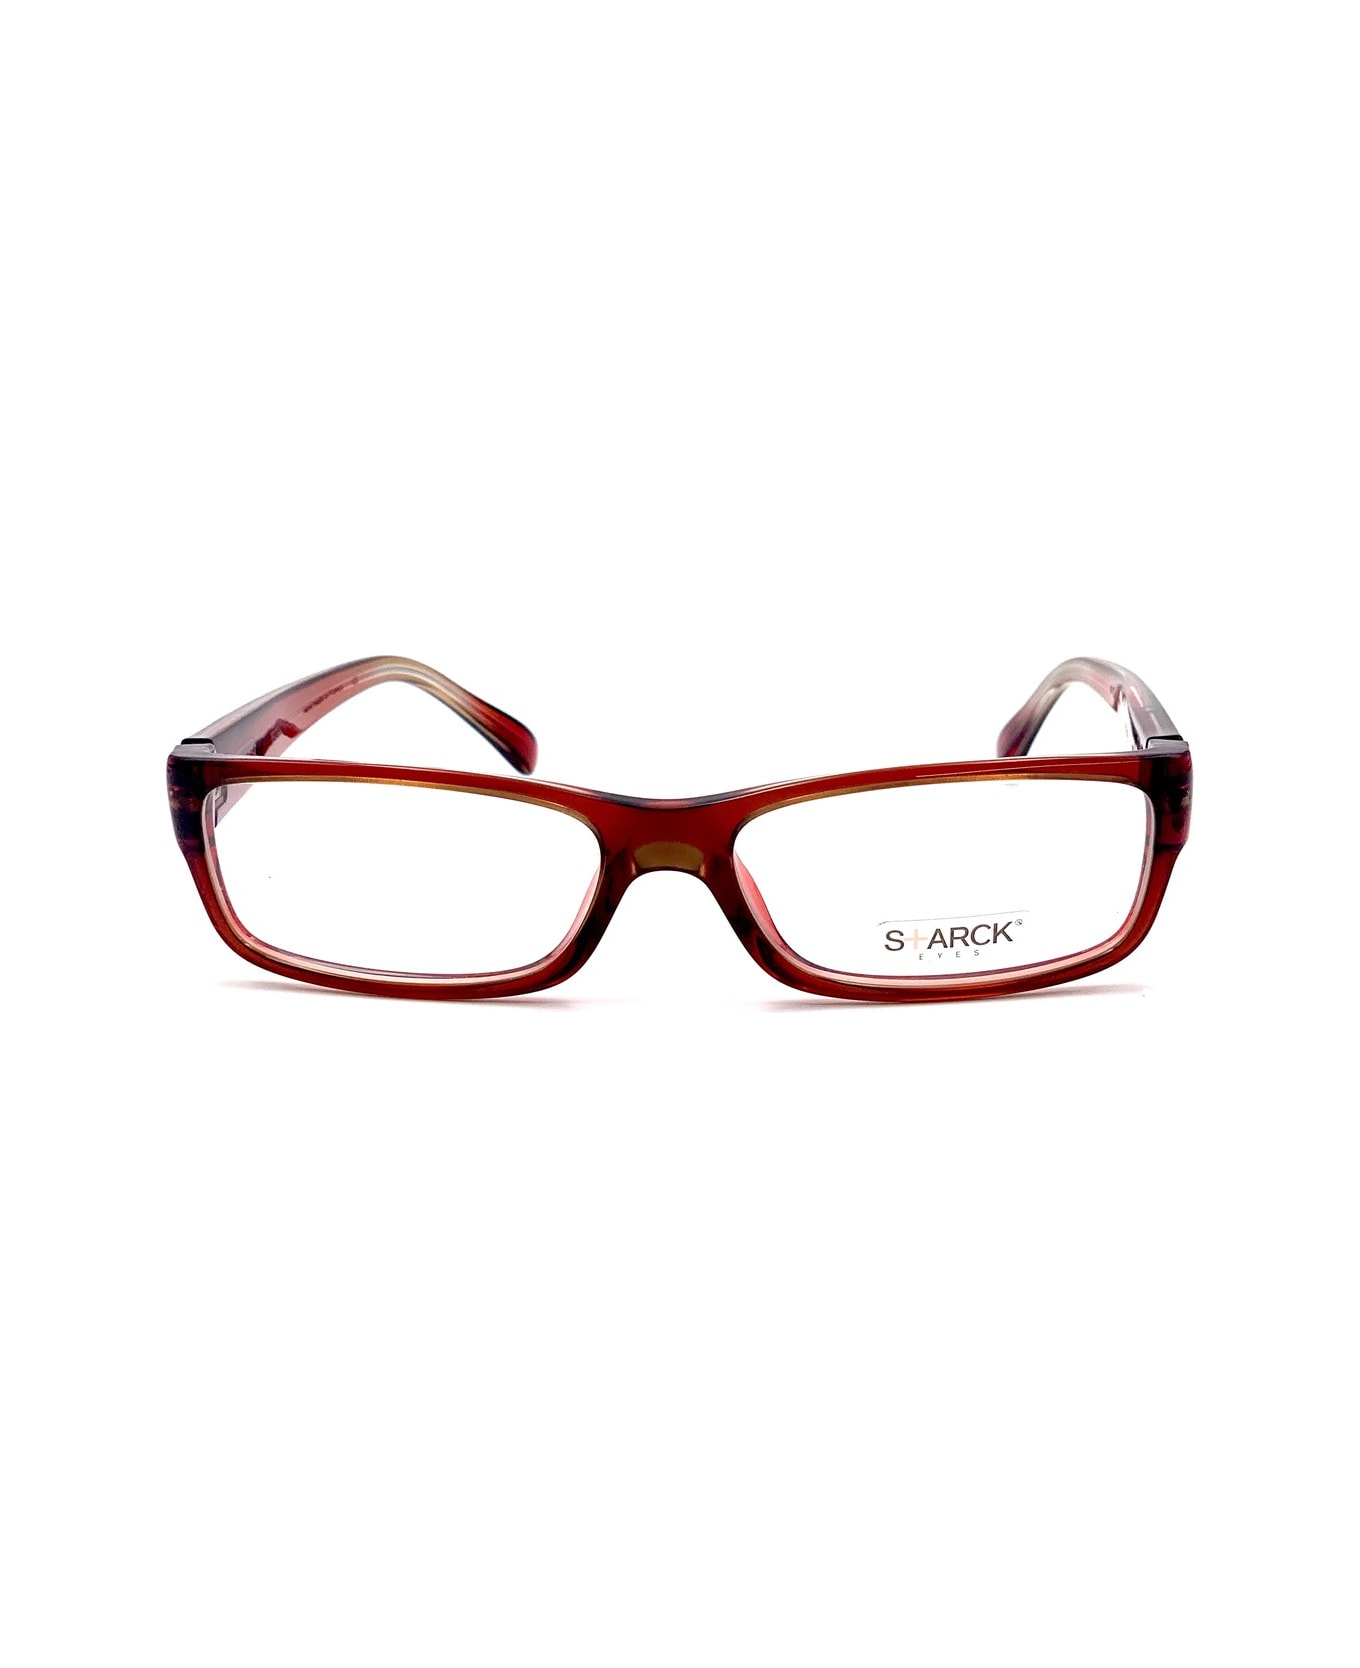 Philippe Starck P0690 Glasses - Rosso アイウェア